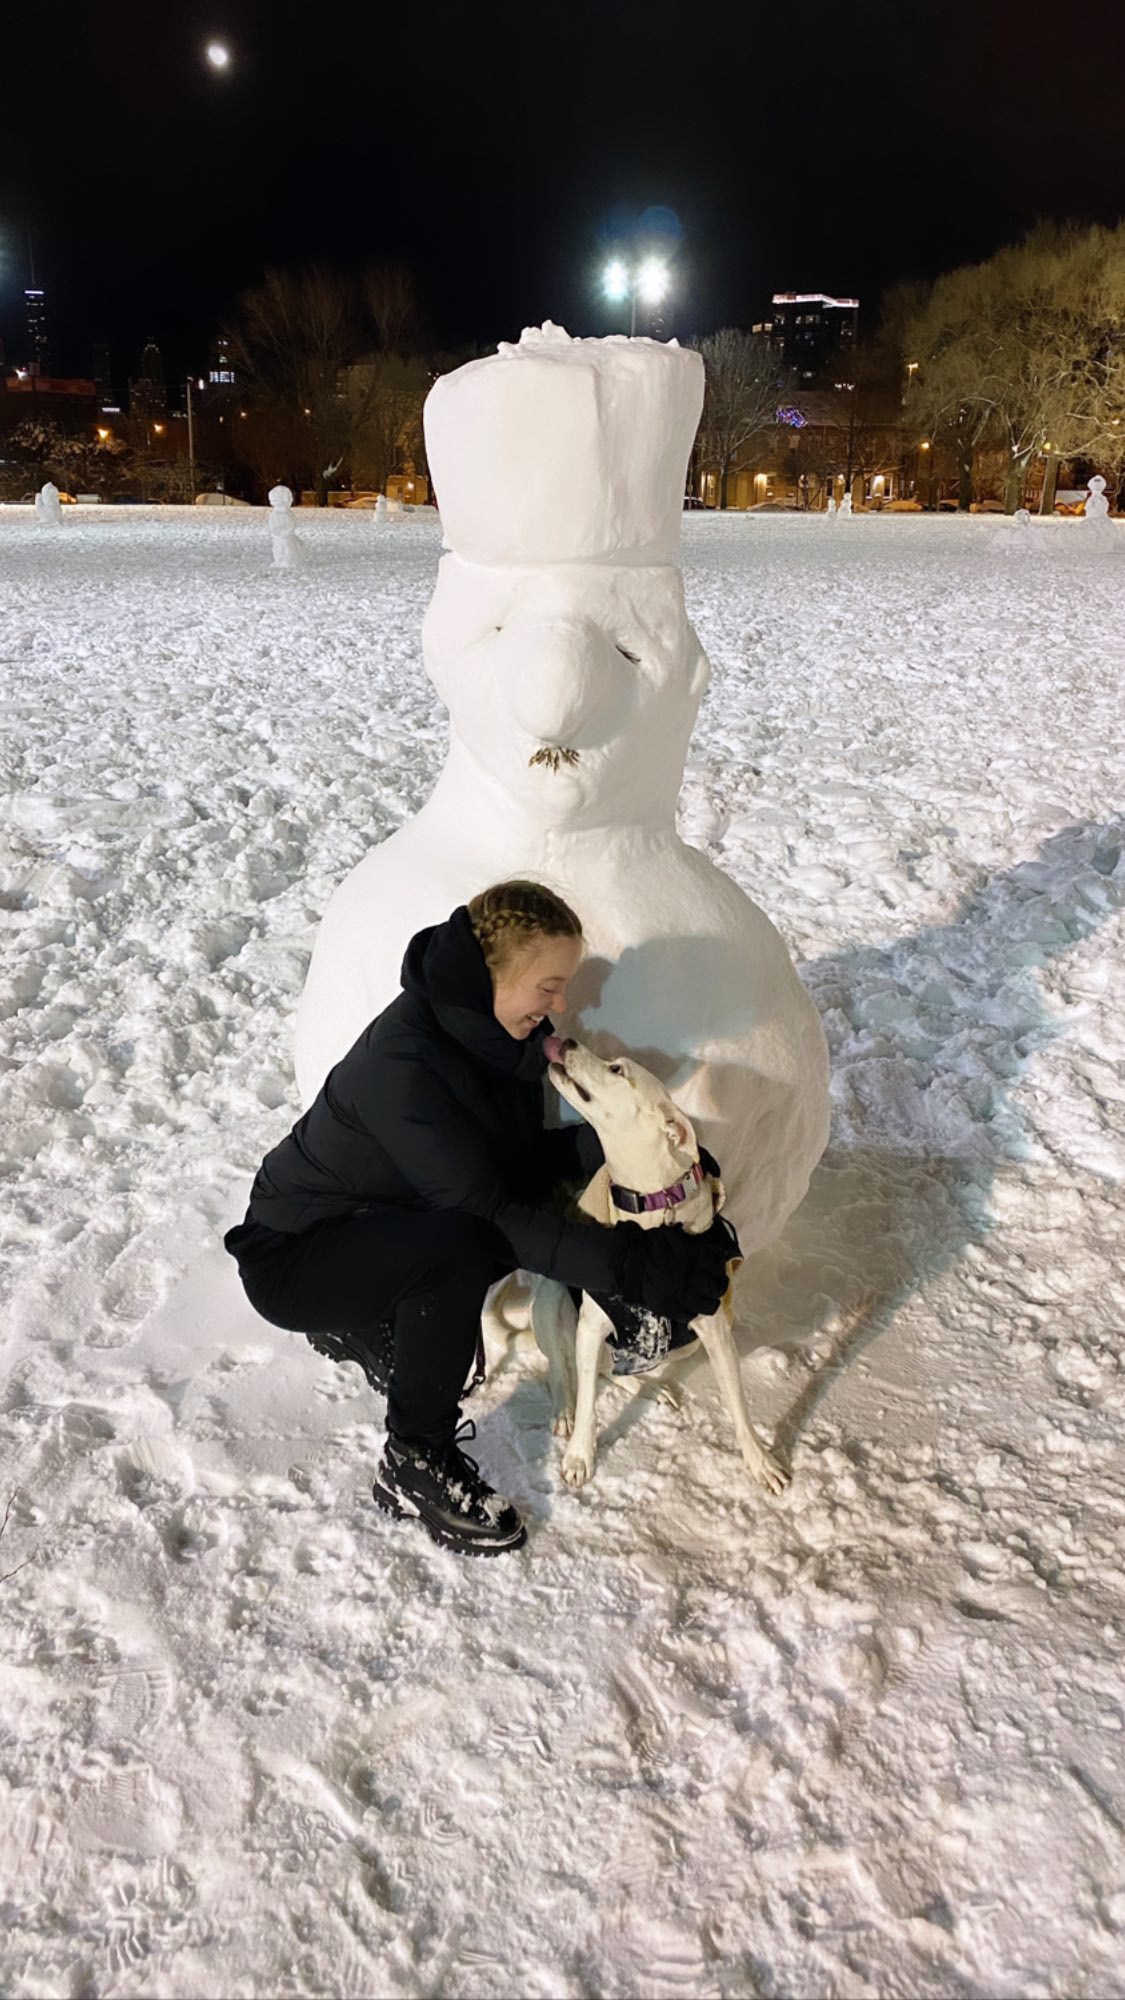 Sydney Sweeney Builds a Snowman Army! - Photo 5